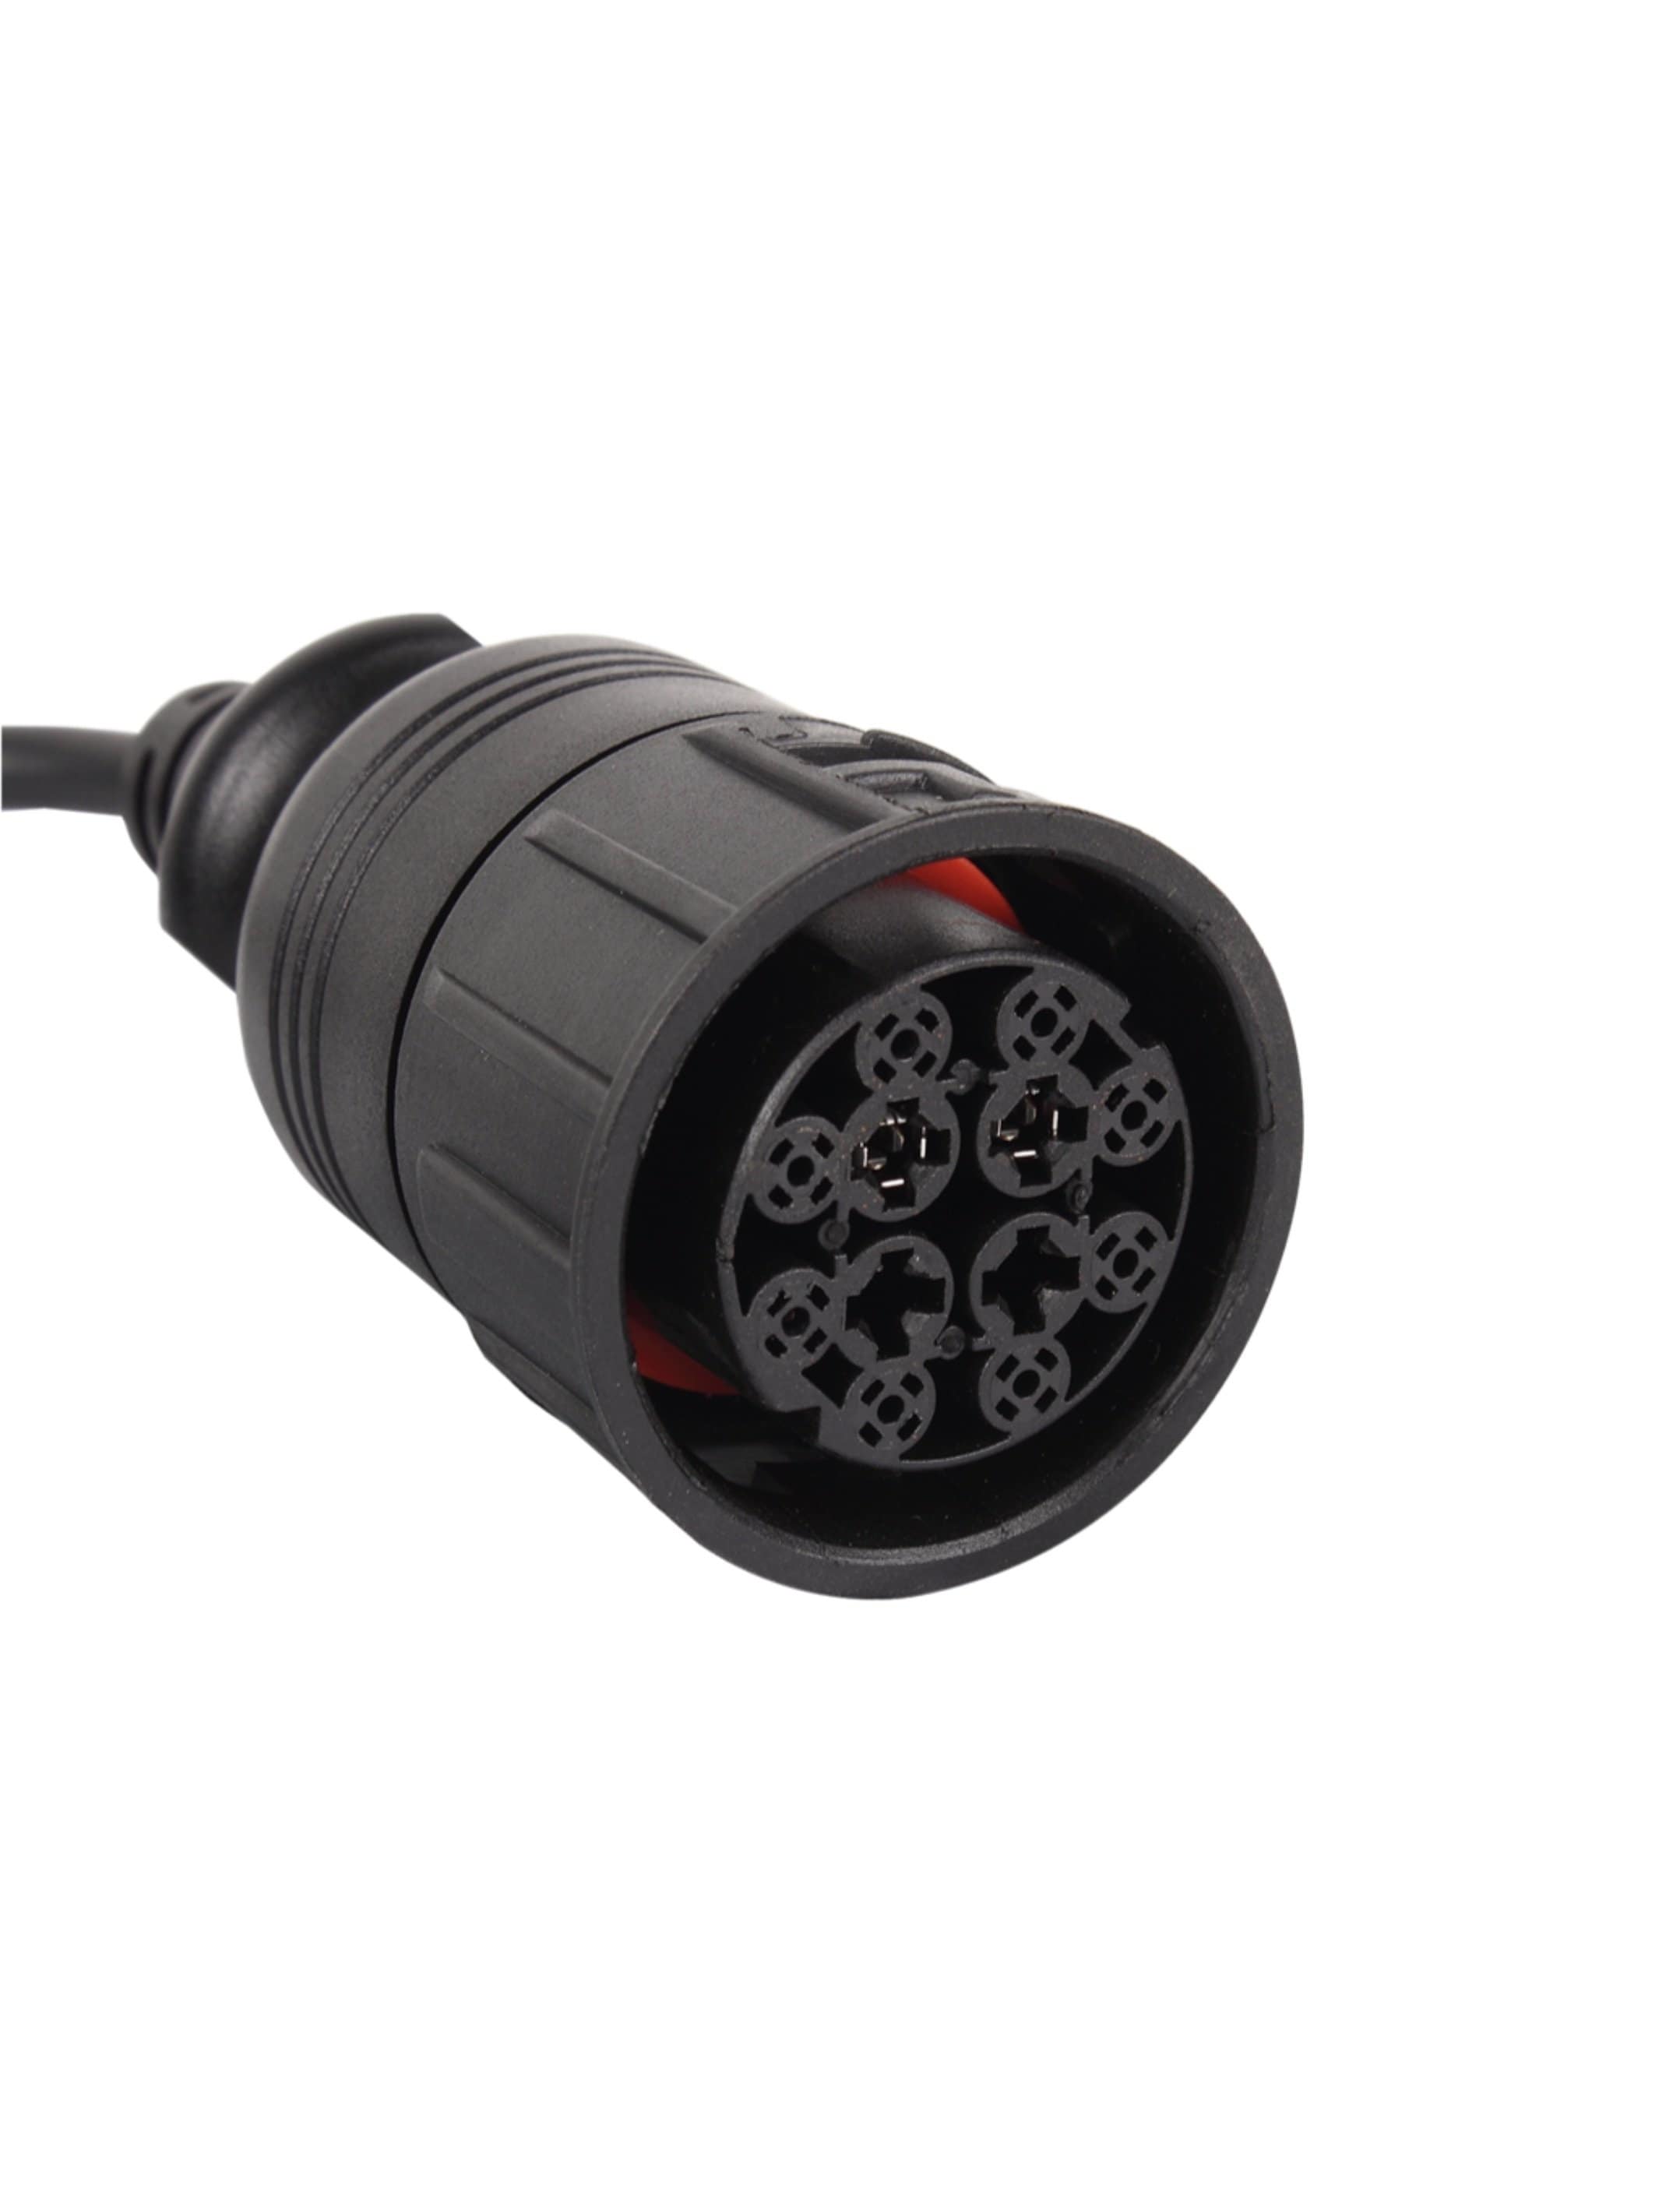 MAN Series TG - 4 Pins Diagnostic Cable - Cojali Jaltest JDC207A